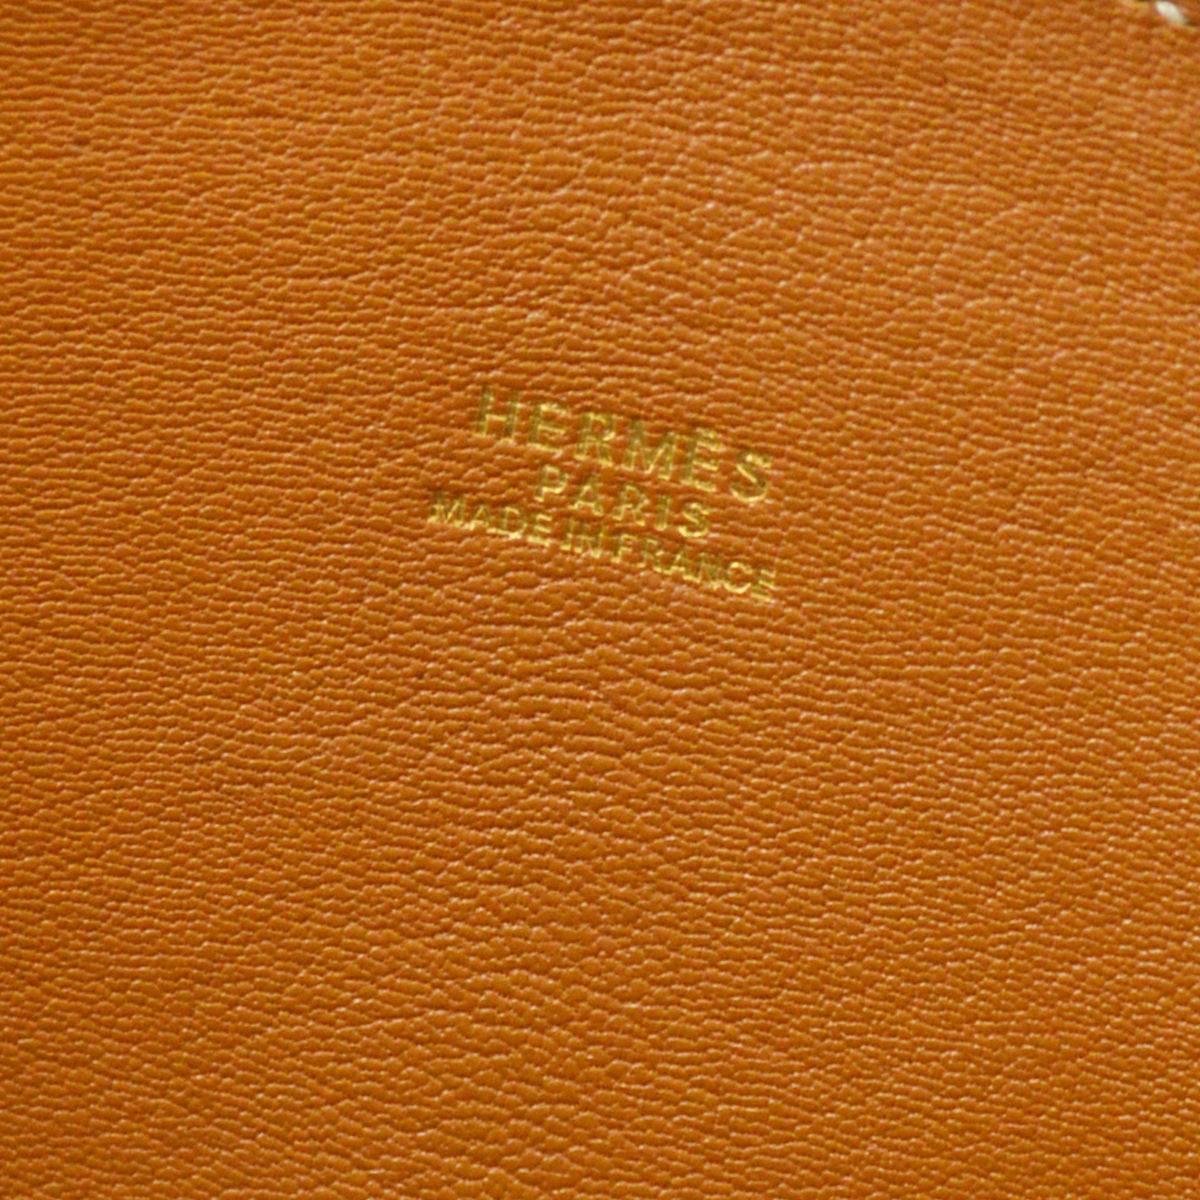 Hermes Cognac Leather Bowling Top Handle Satchel Shoulder Bag 2